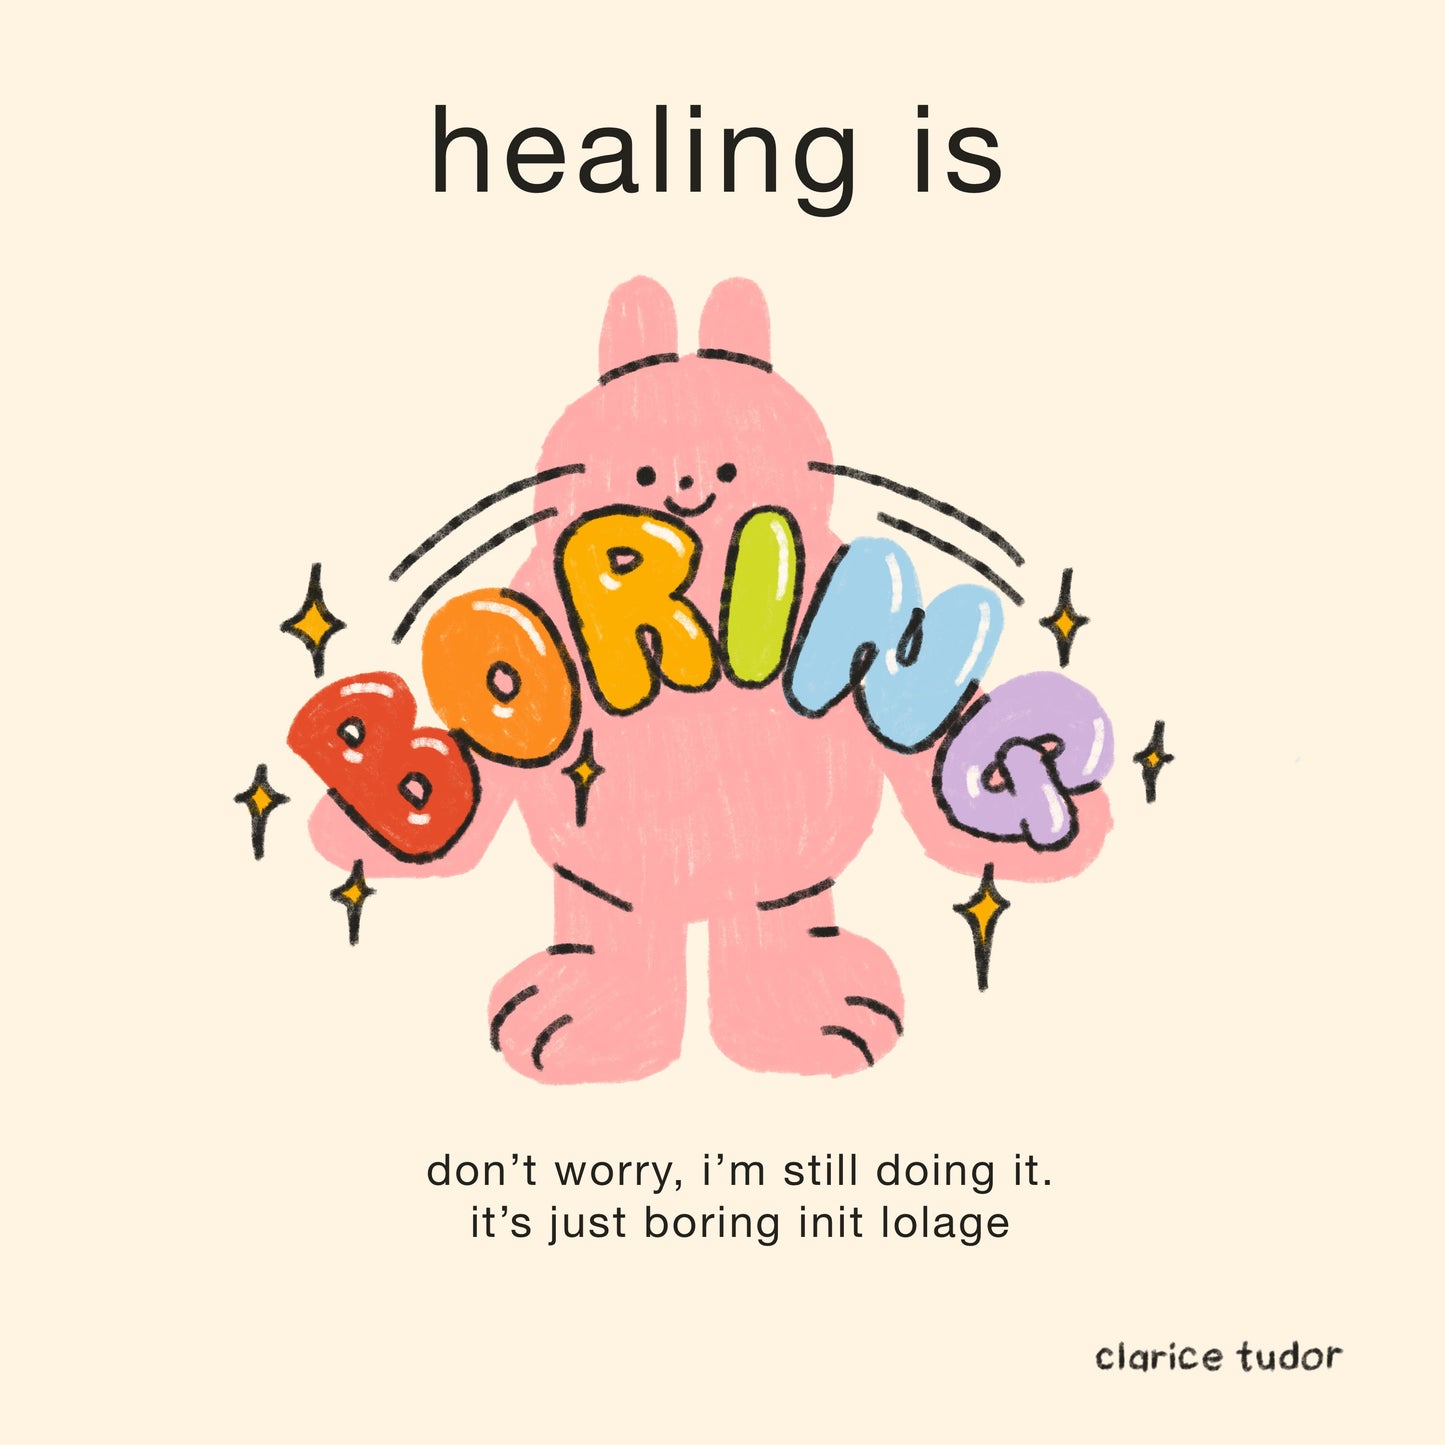 Healing is Boring Comic Postcard Print